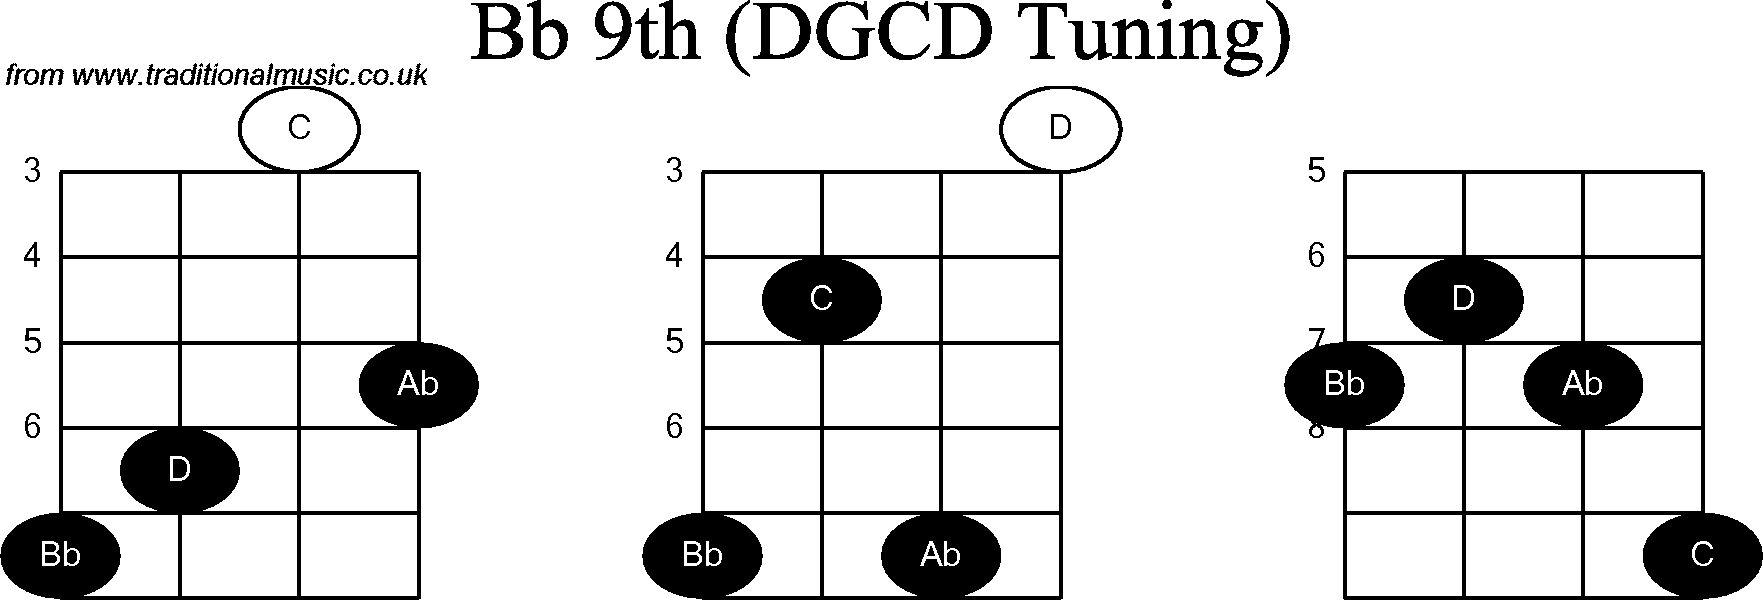 Chord diagrams for Banjo(G Modal) Bb9th